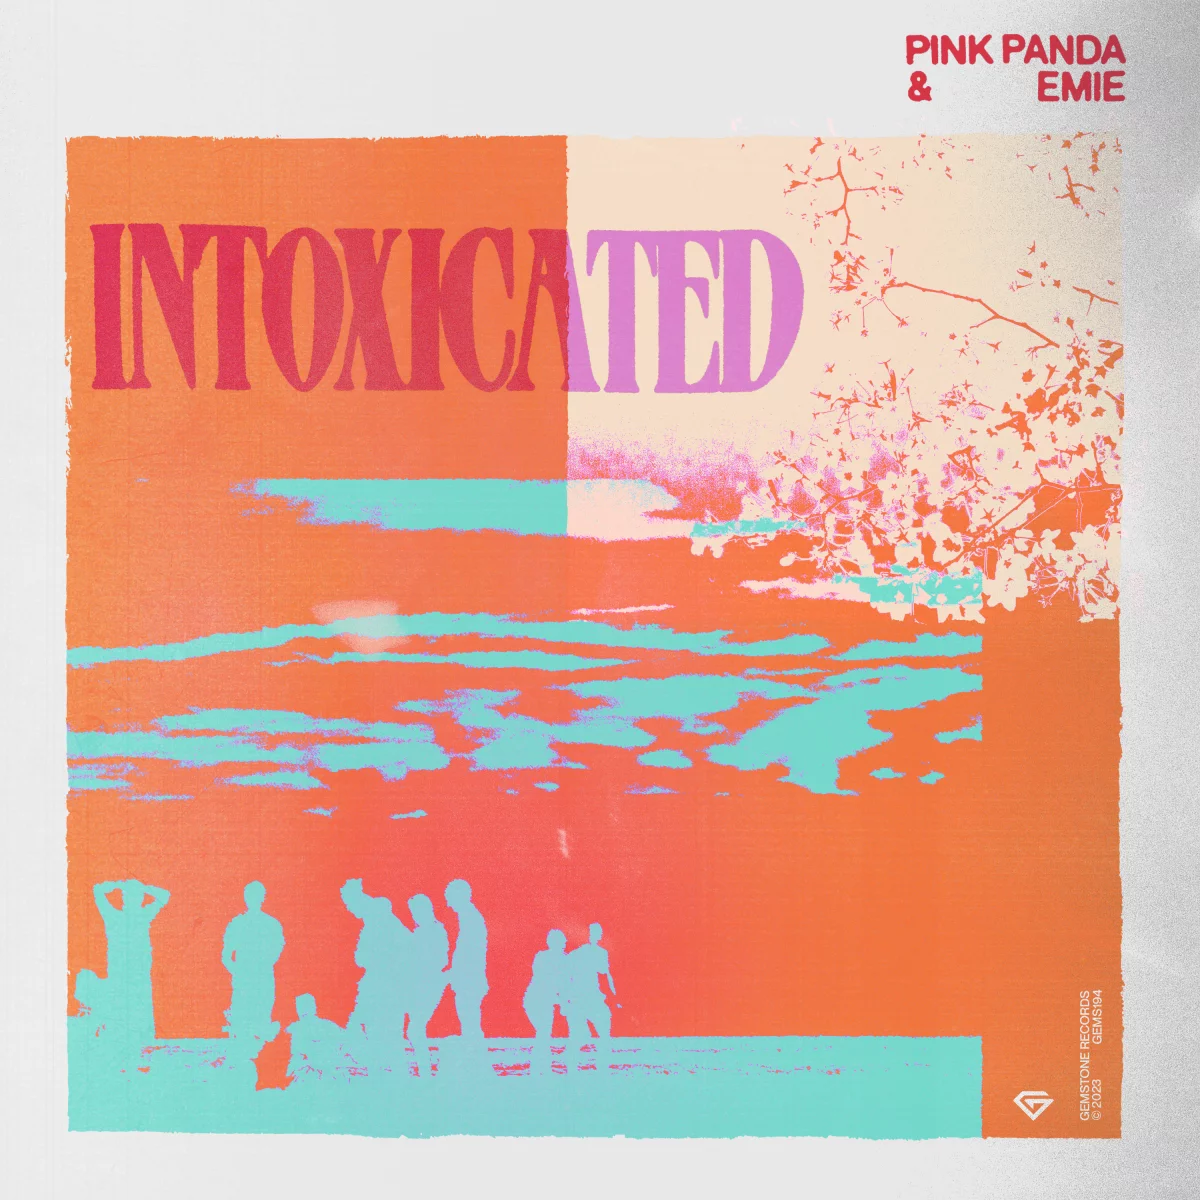 Intoxicated - Pink Panda⁠ & Emie⁠ 